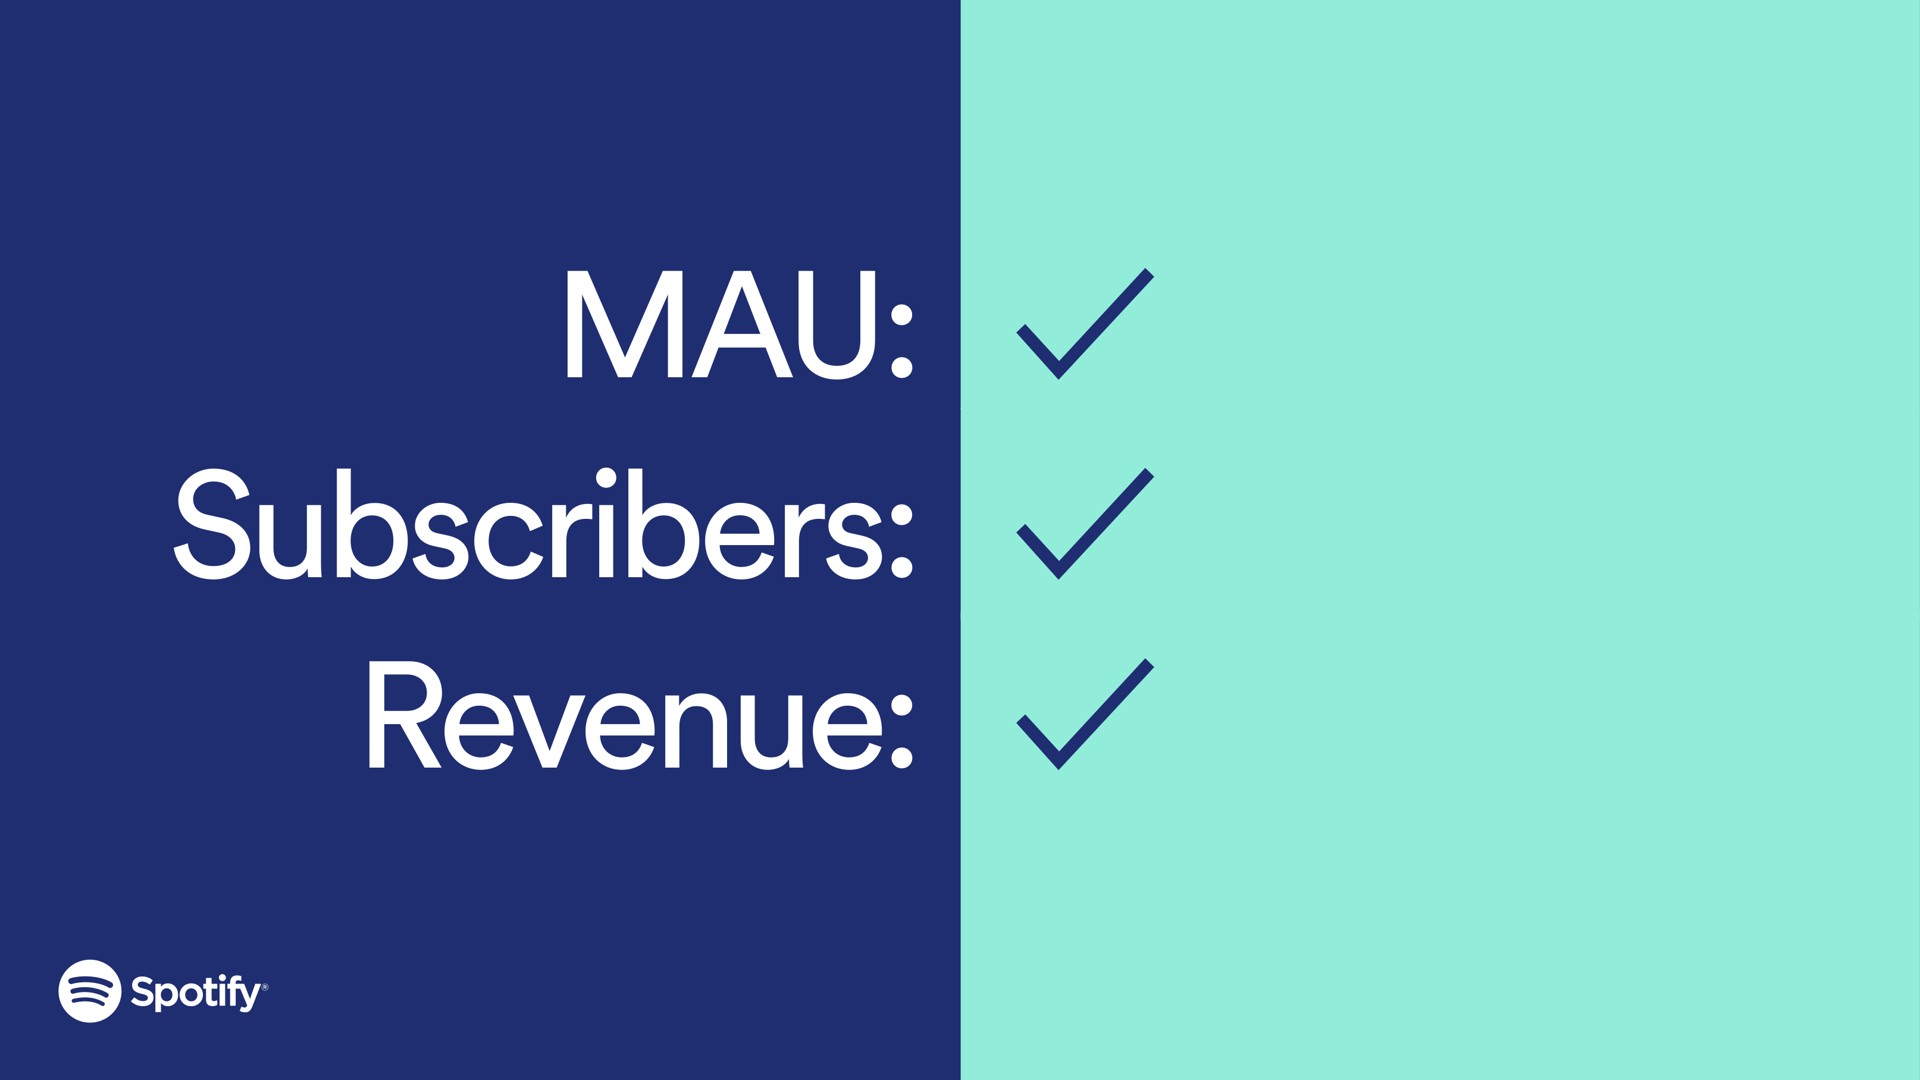 mau subscribers revenue | Spotify